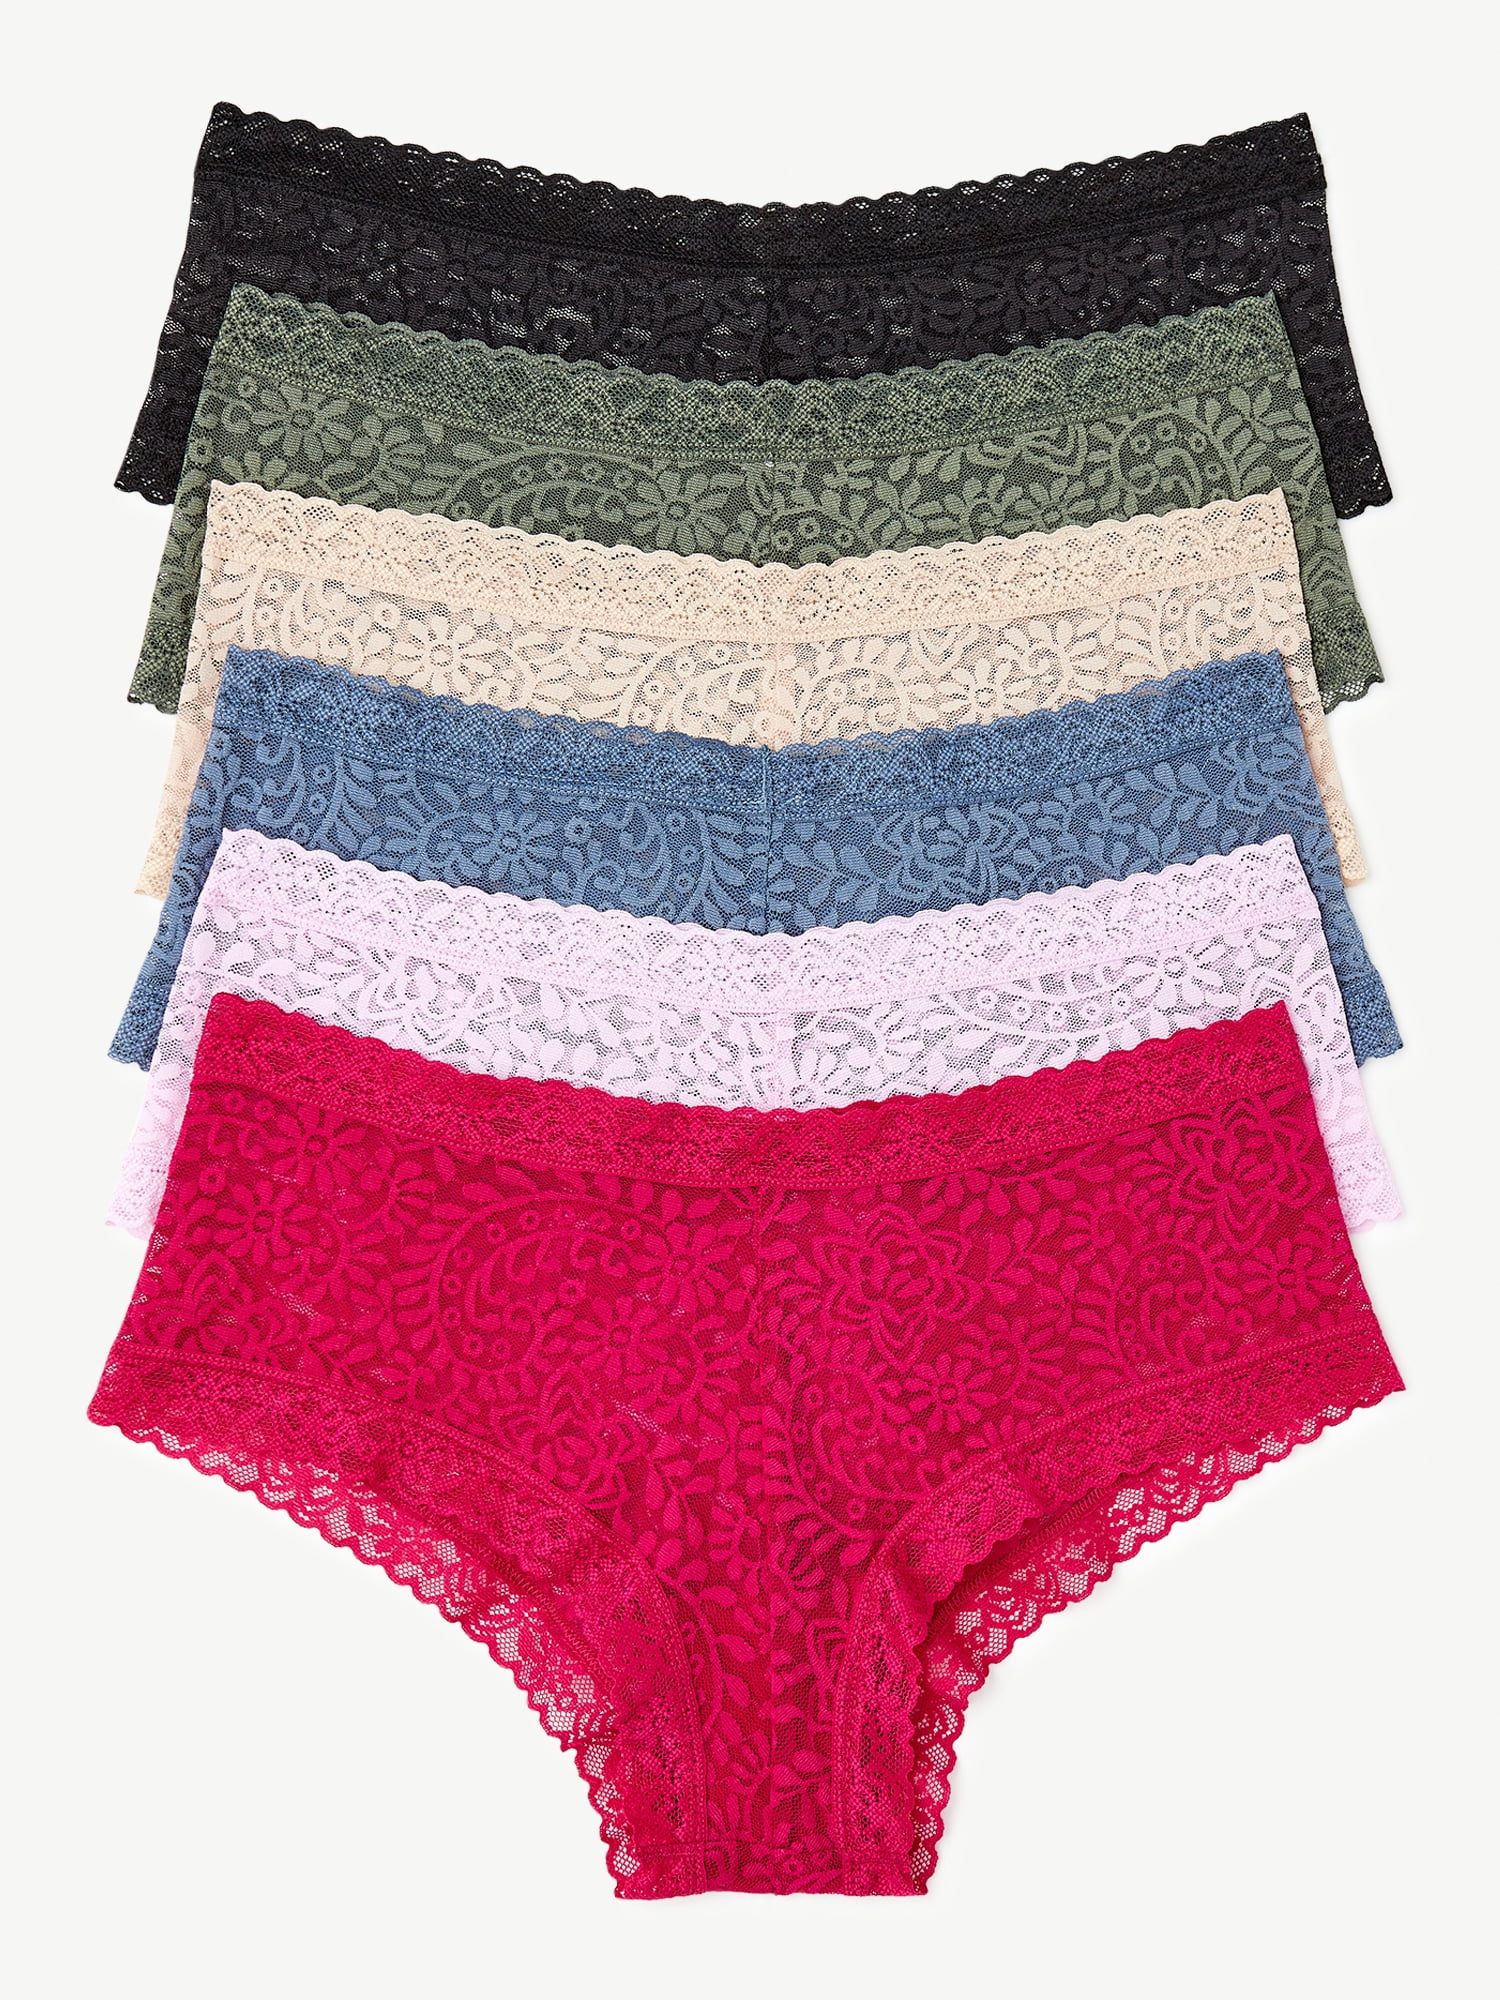 Joyspun Women's Stretch Lace Cheeky Panties, 6-Pack, Sizes S to